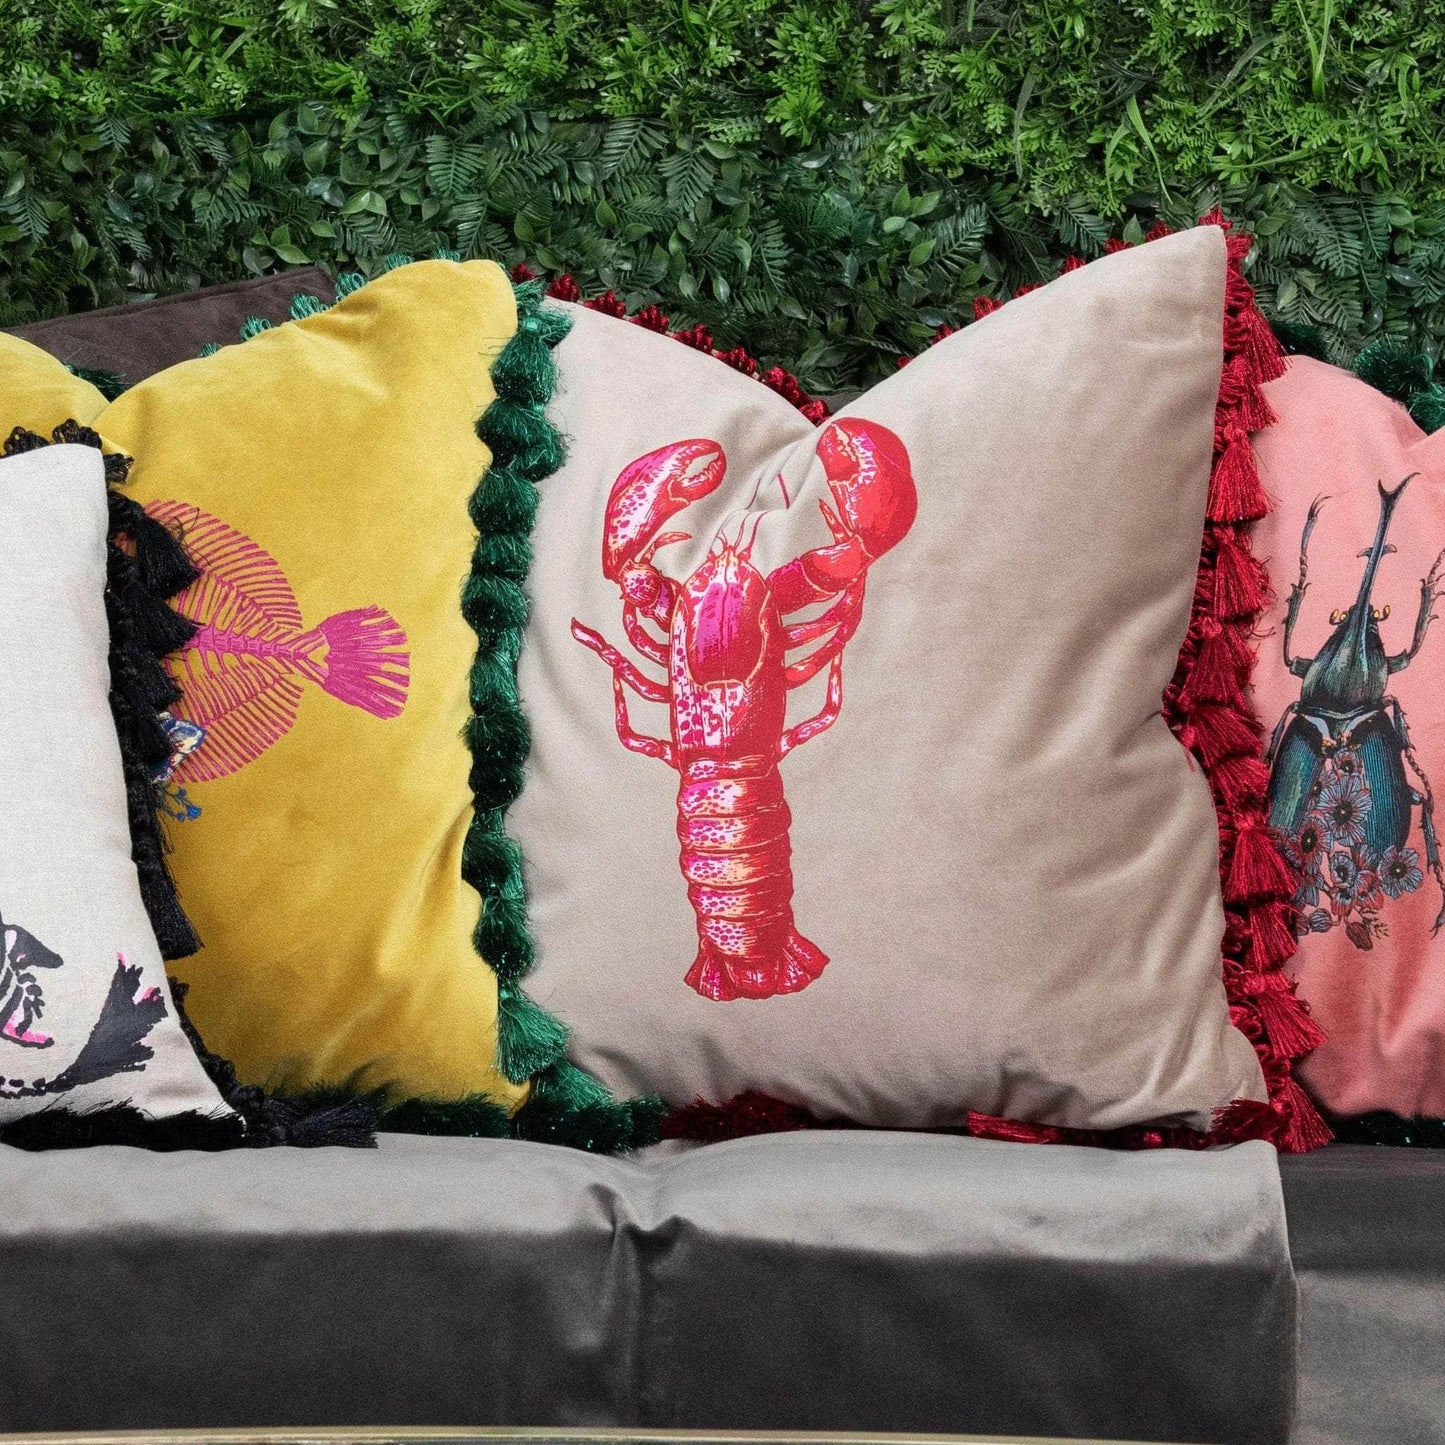 Velvet Lobster Print Langosta Taupe Cushion With Tassels